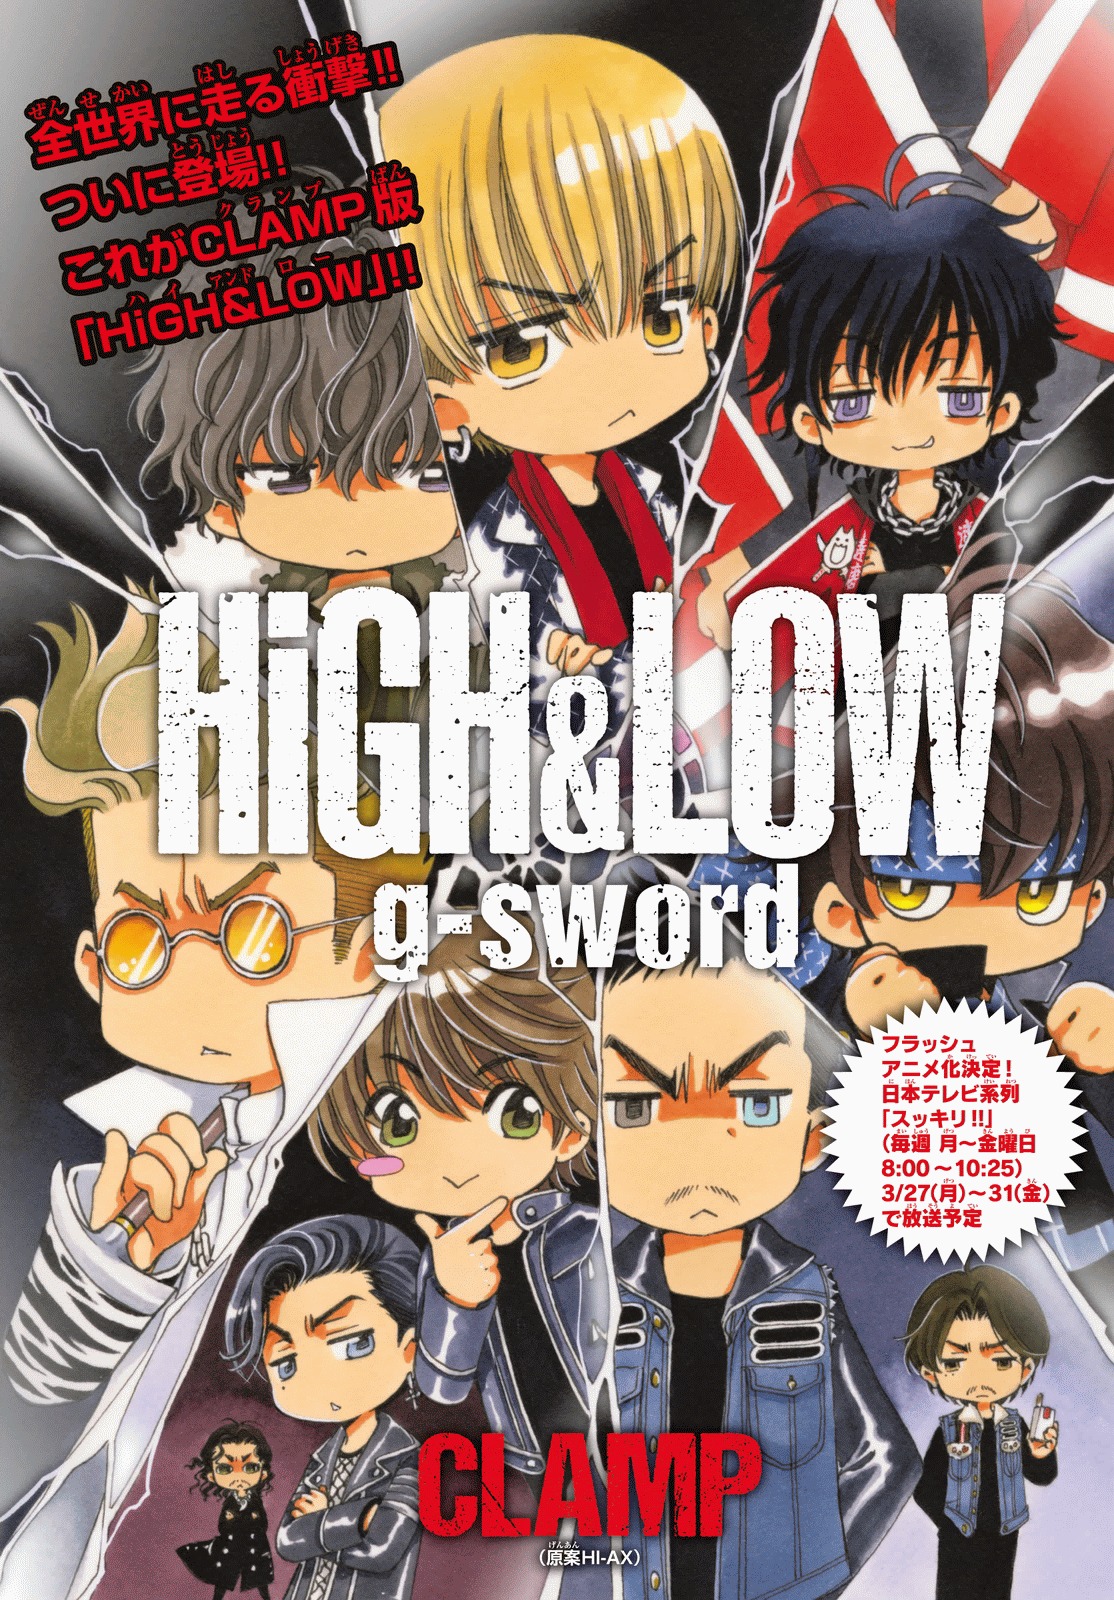 Anime DVD HIgh & LOW g-sword animation DVD | Video software | Suruga-ya.com